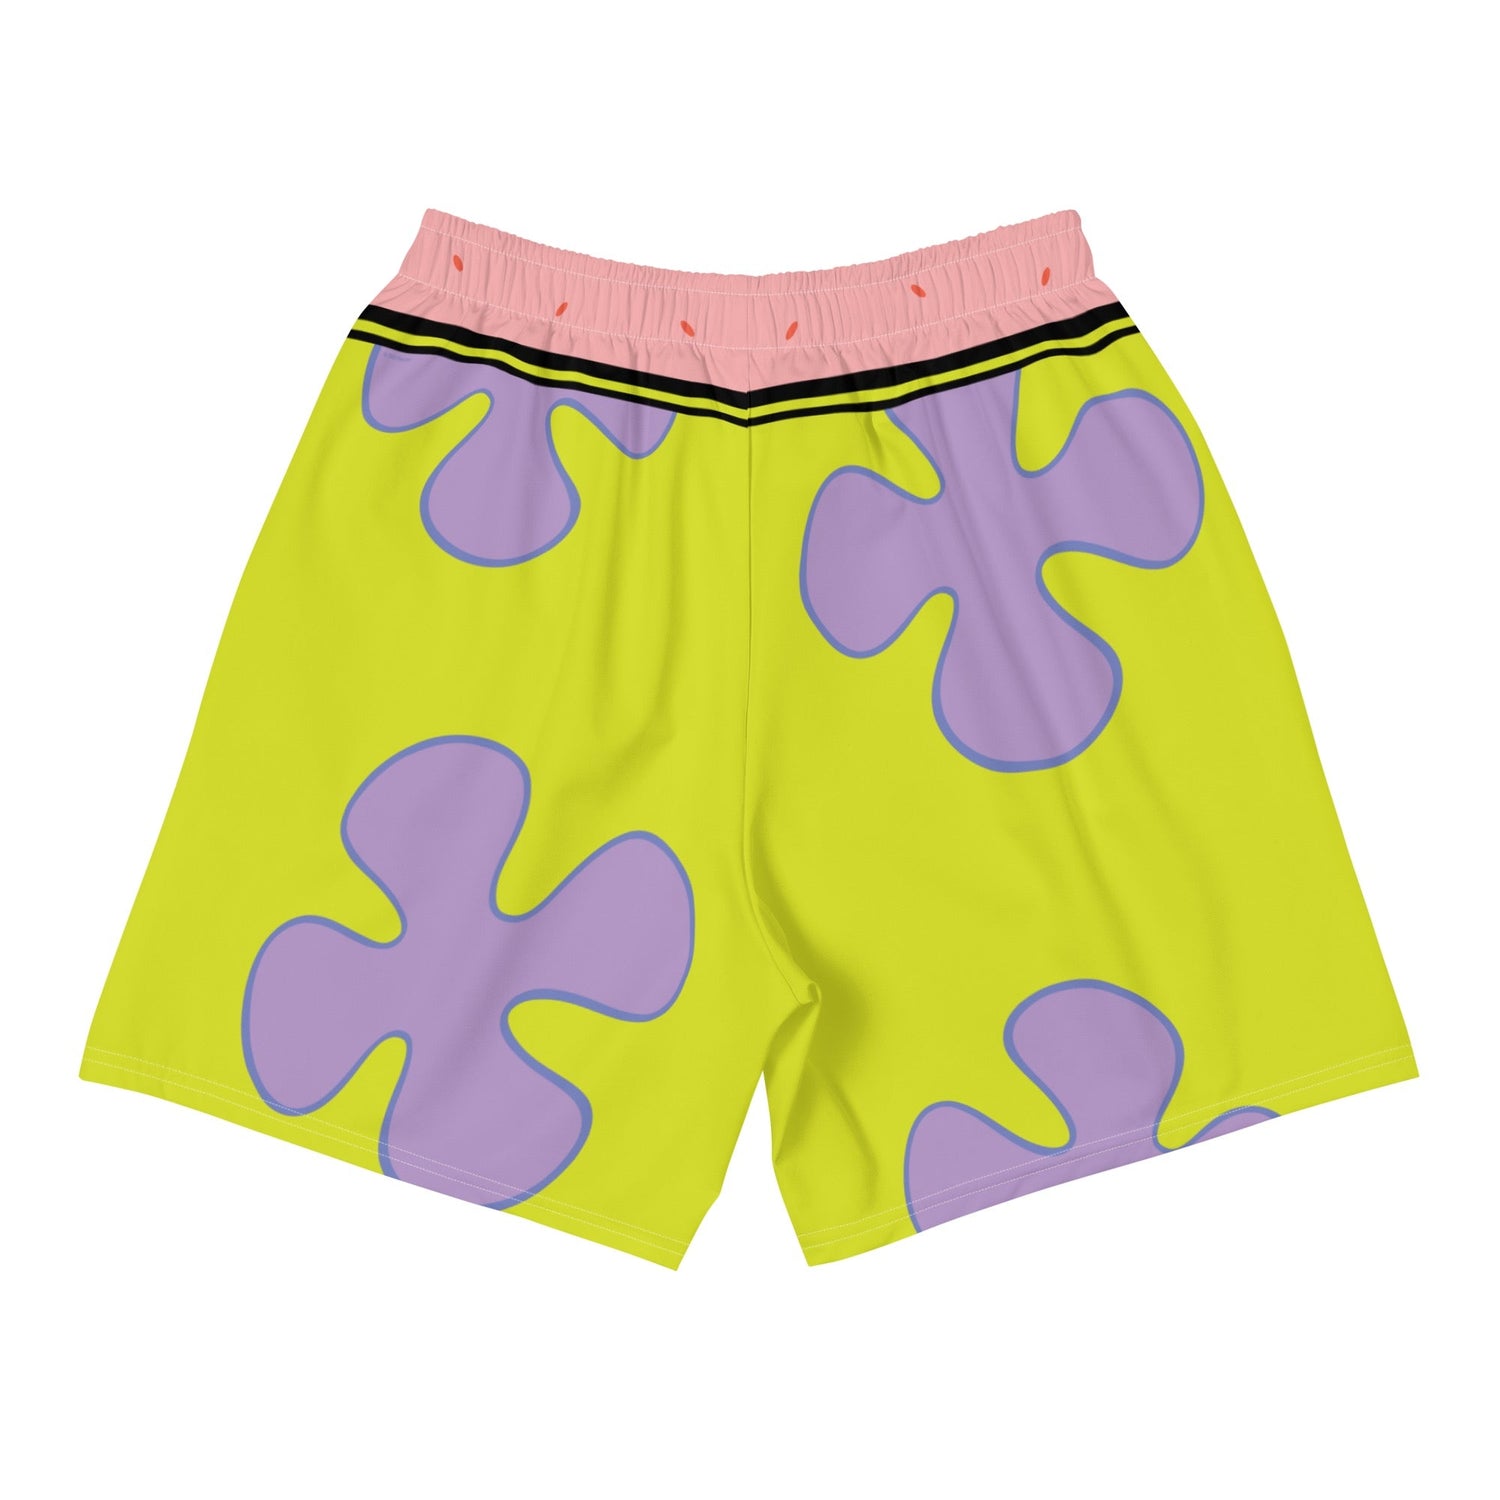 SpongeBob SquarePants Patrick Star Athletic Shorts - Paramount Shop